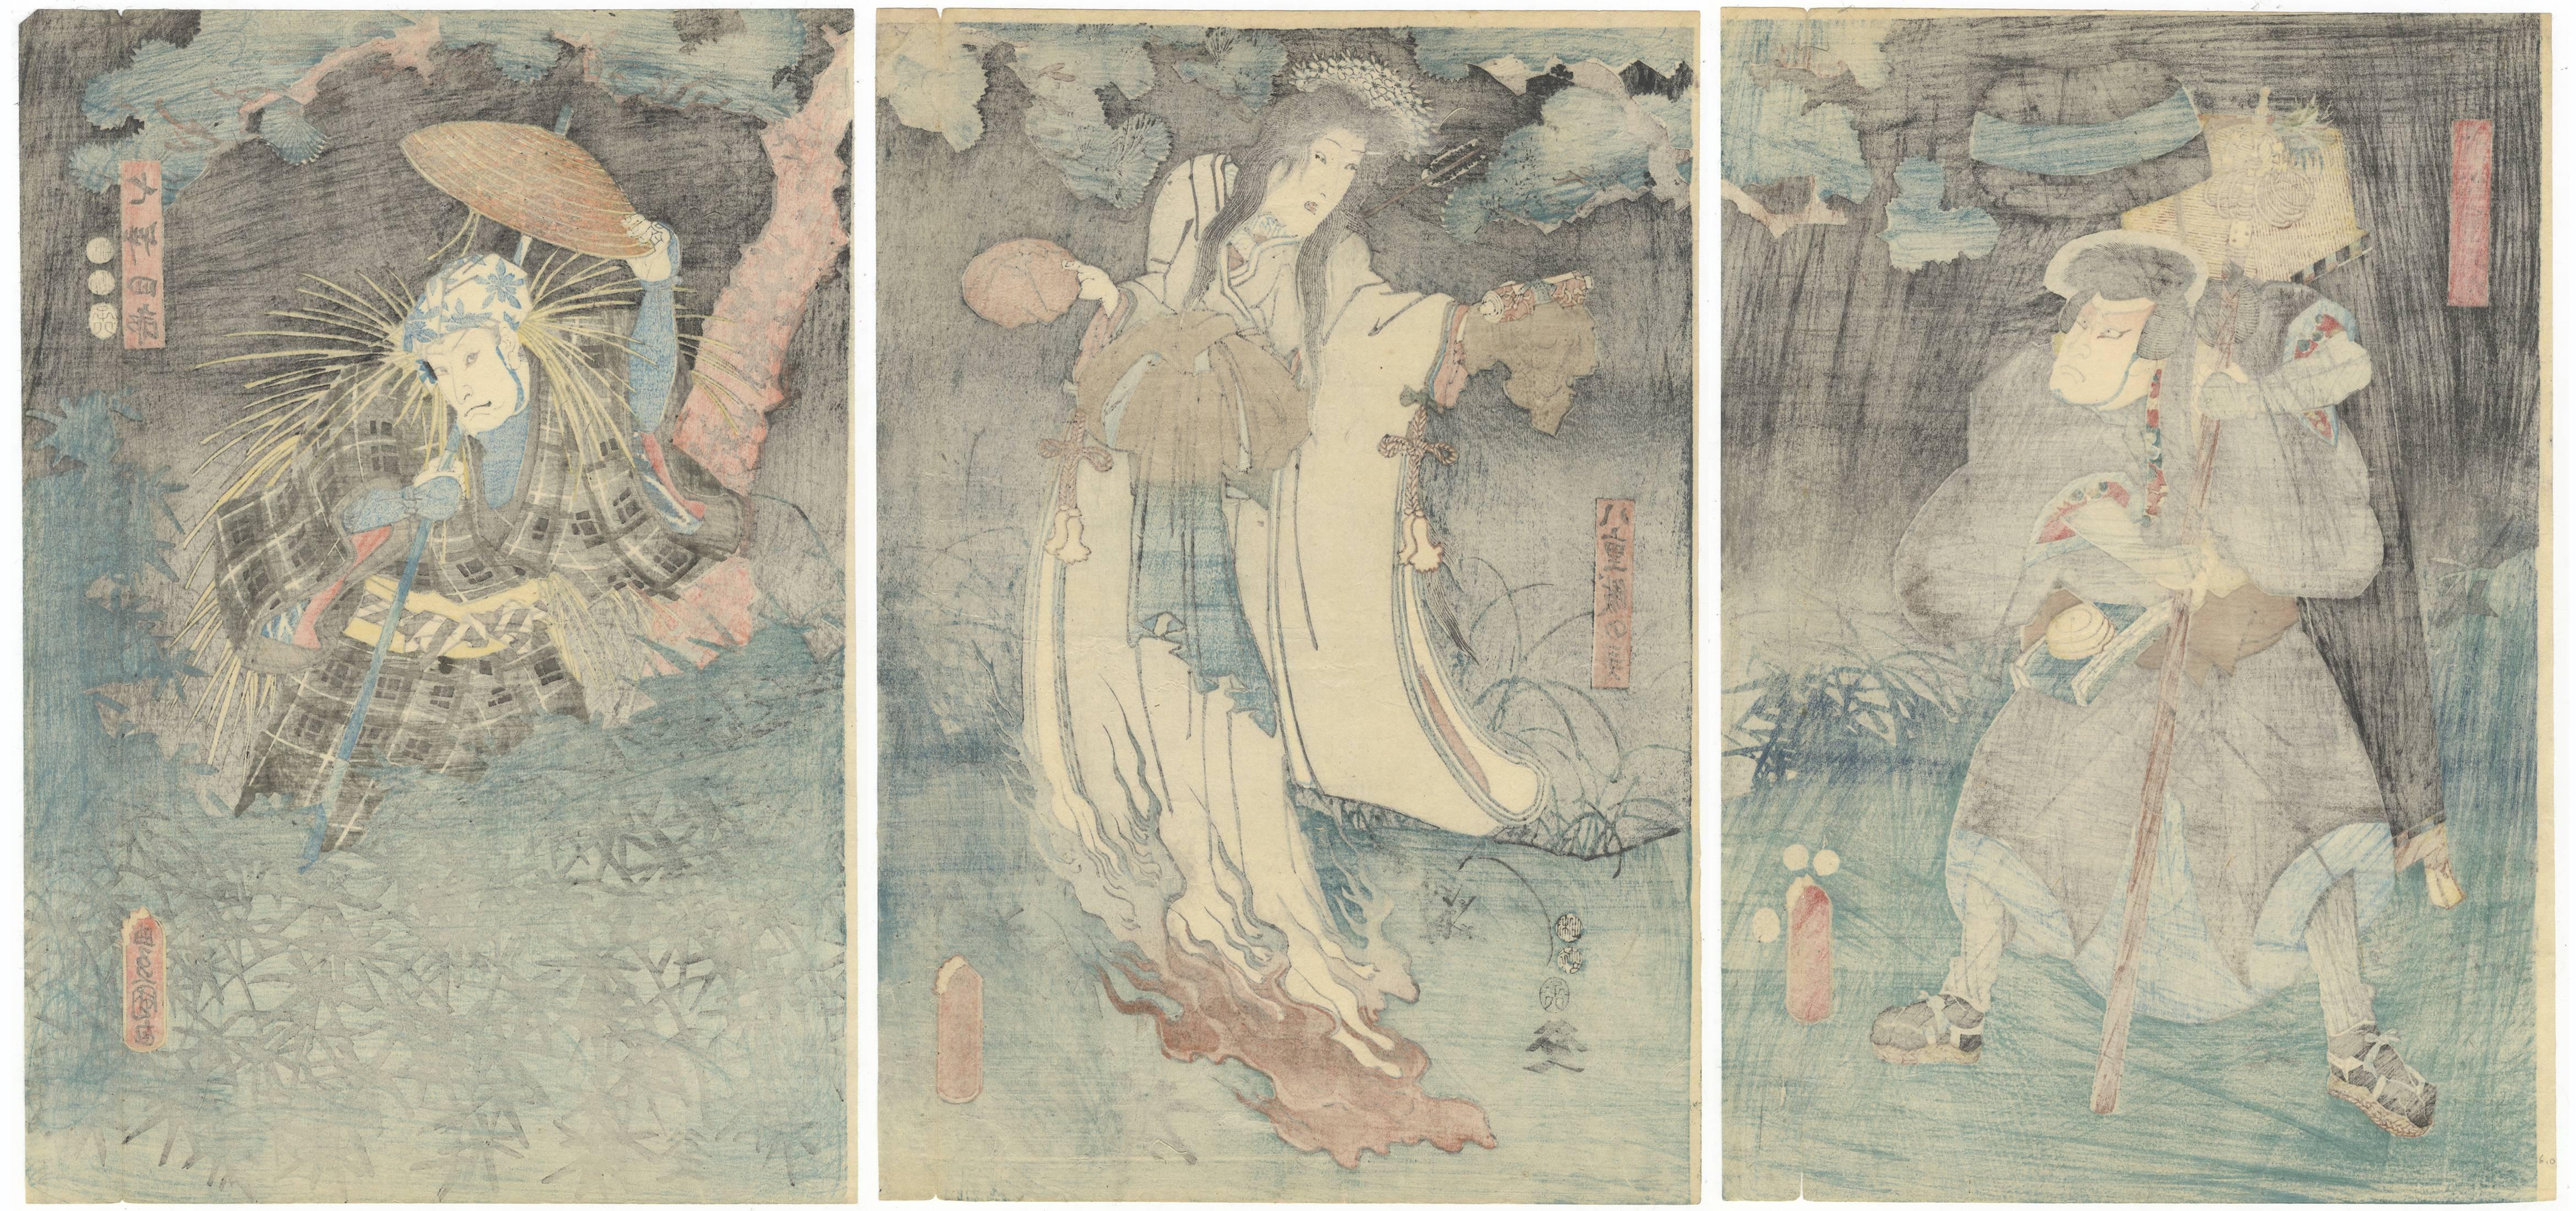 Toyokuni III Utagawa, Ukiyo-e, gravure sur bois japonaise, fantôme, période Edo - Print de Utagawa Kunisada (Toyokuni III)